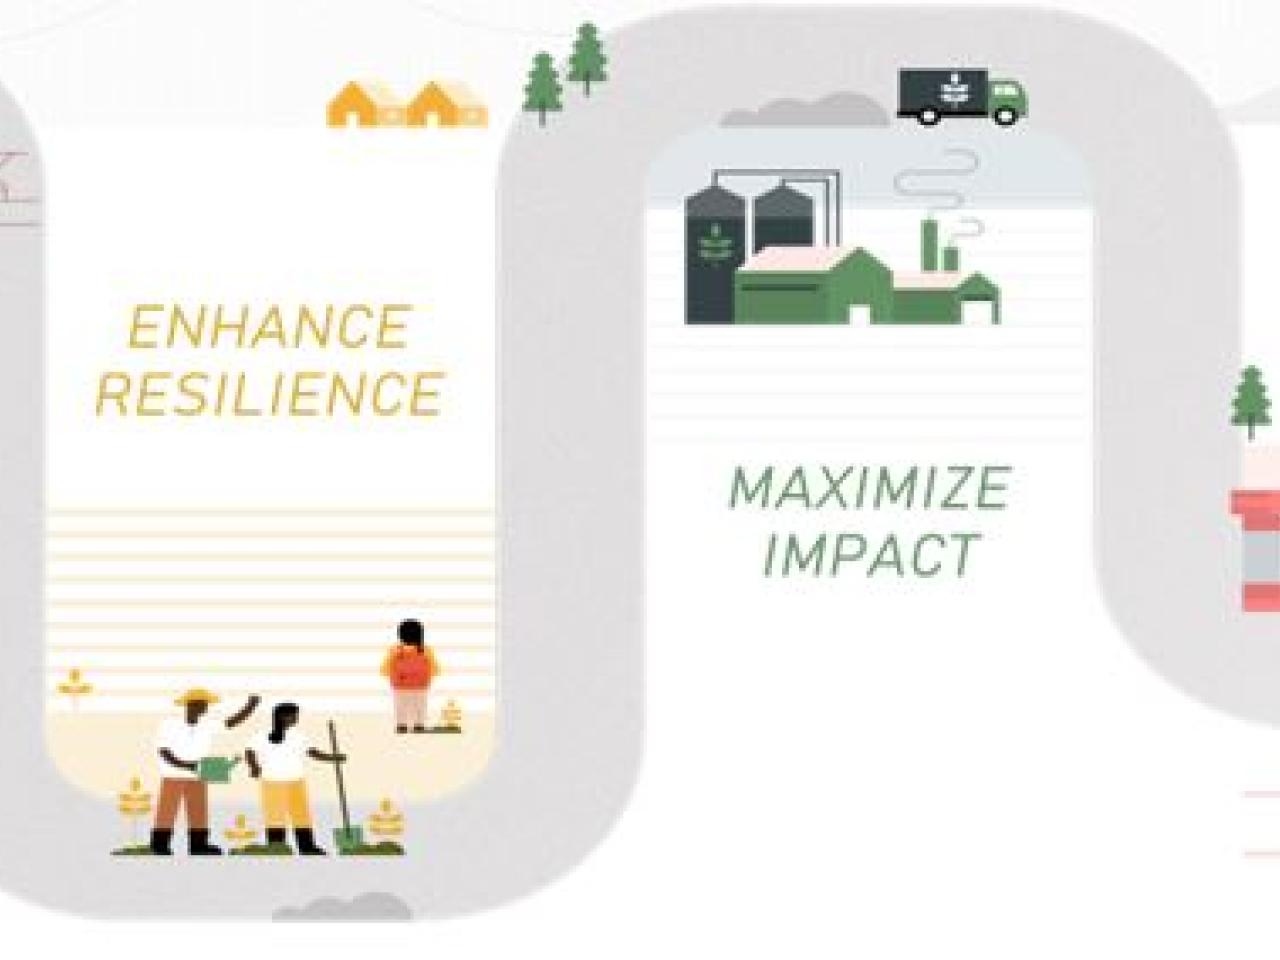 Engage Communities, Enhance resilience, maximize impact, drive shareholder value